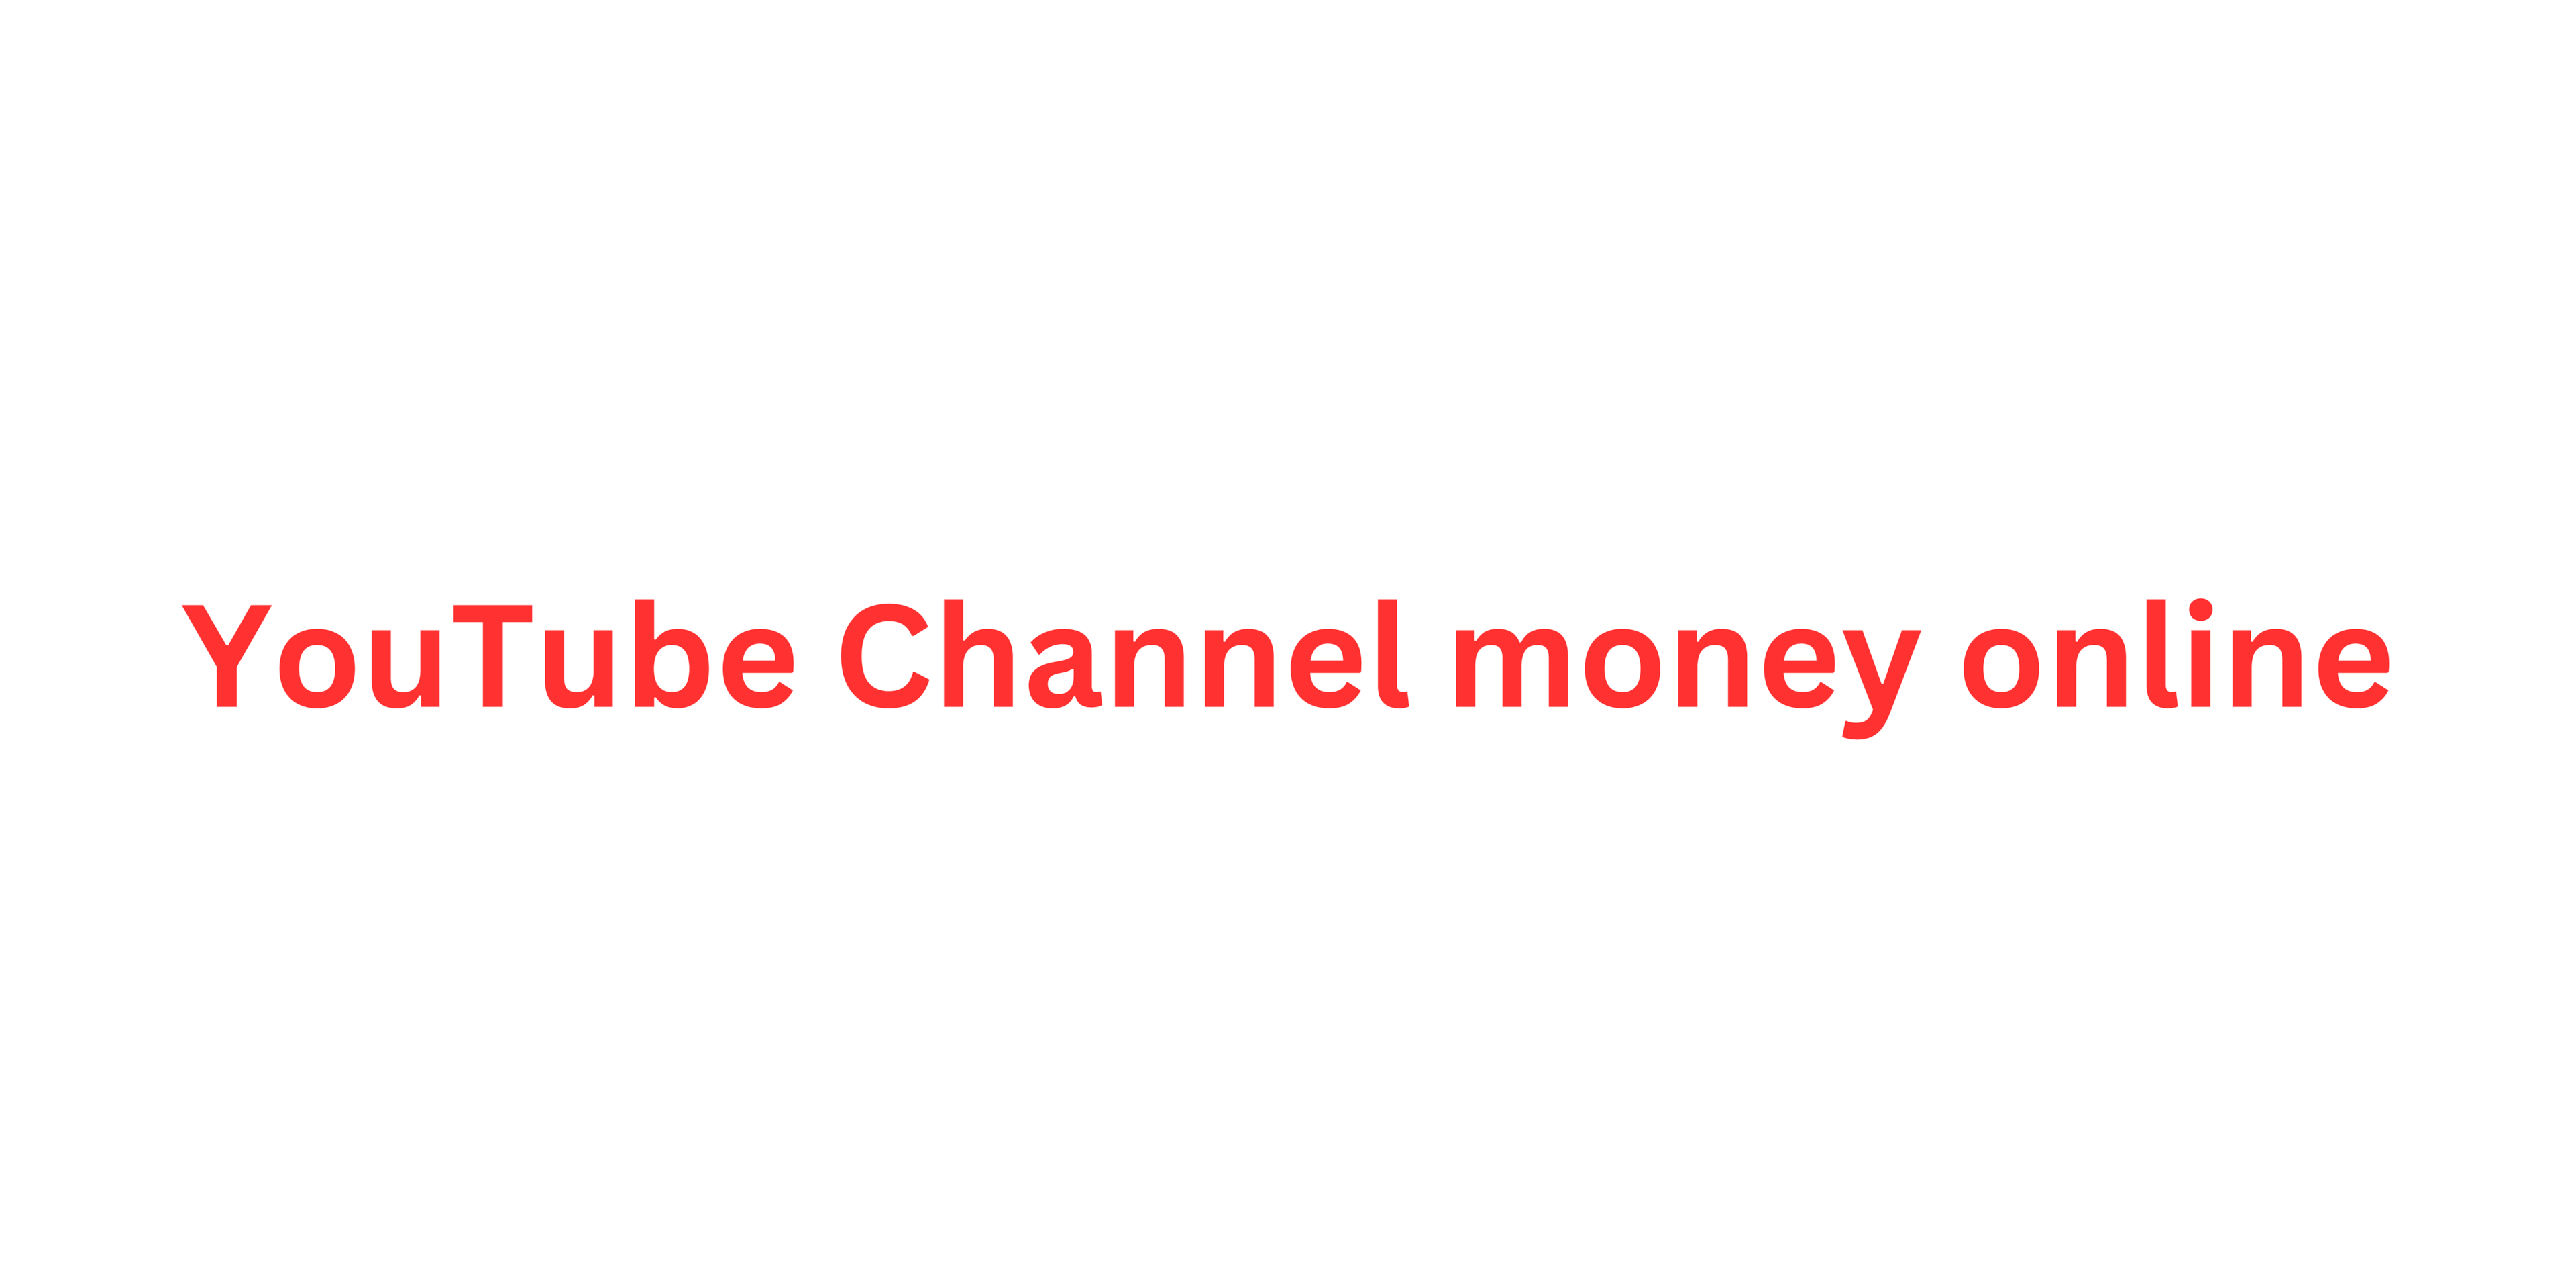 YouTube Channel money online